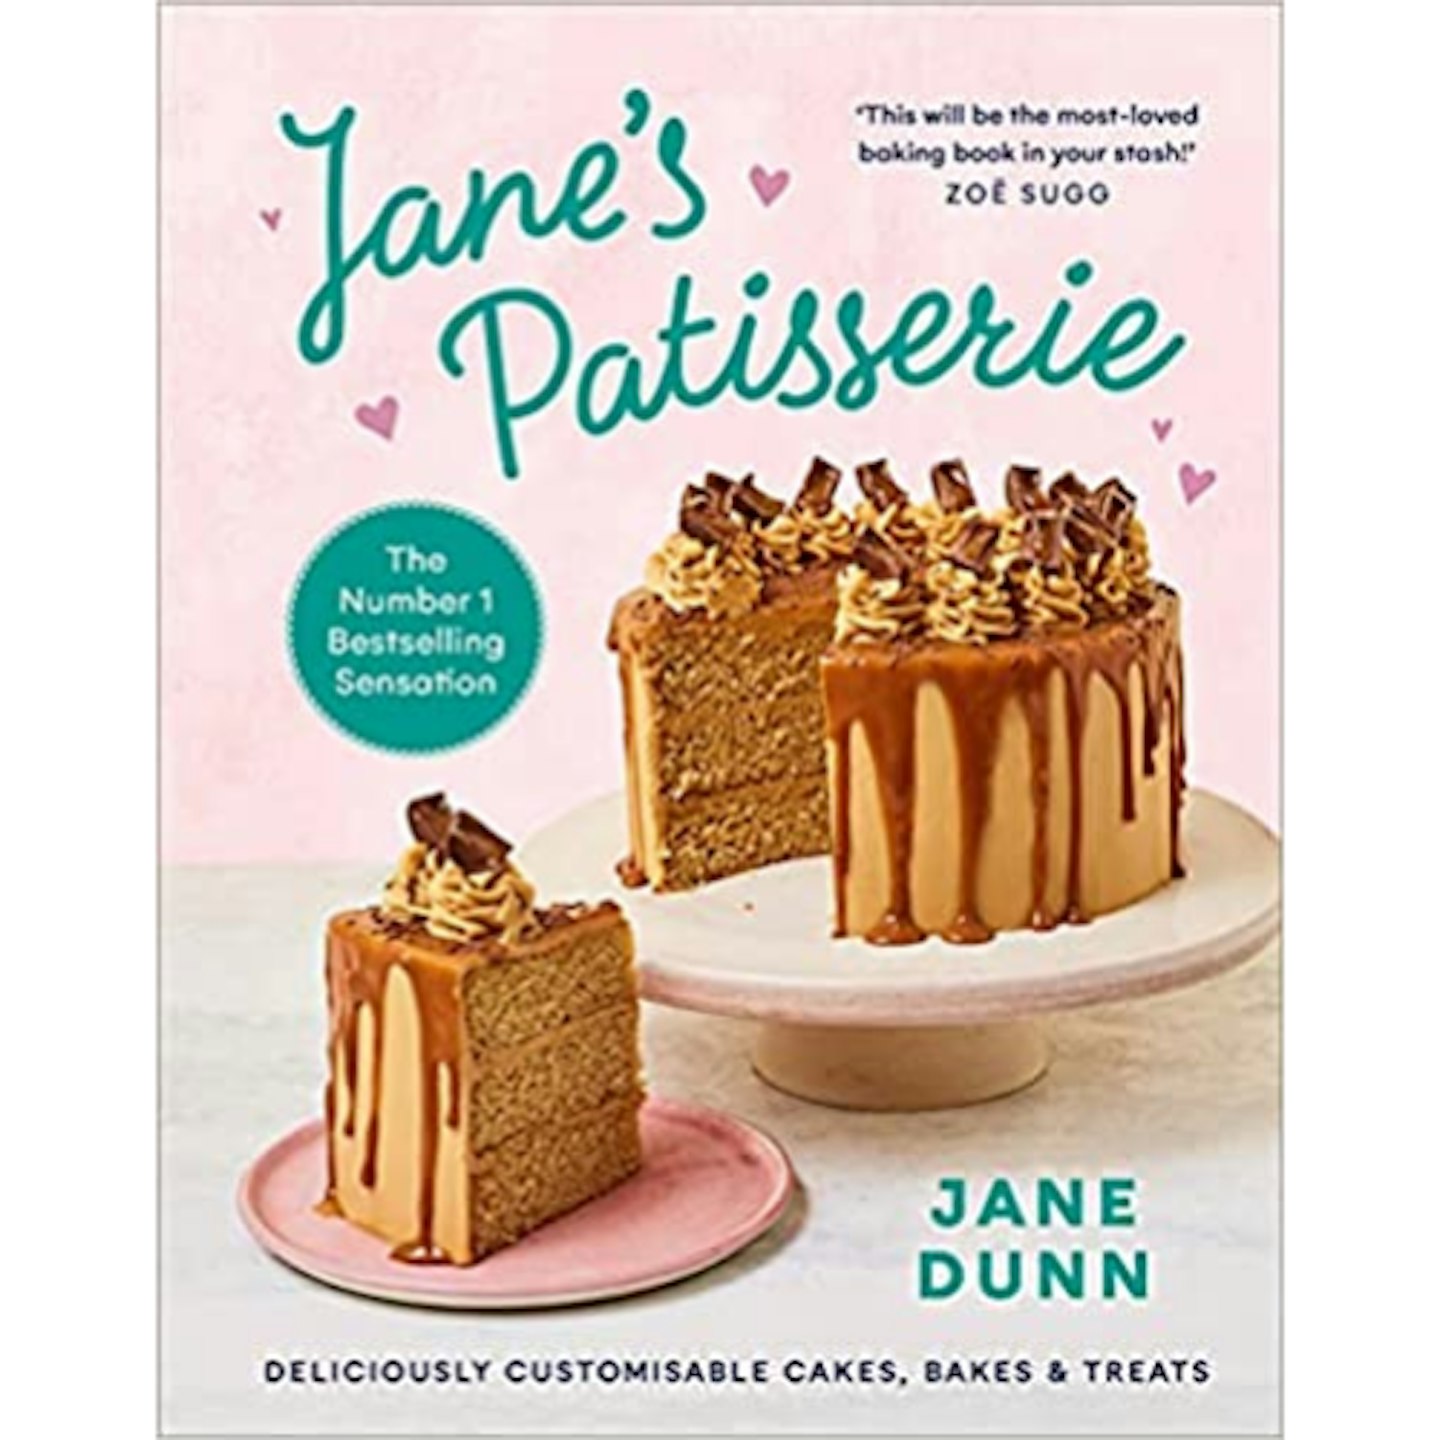 Jane's Patisserie by Jane Dunn